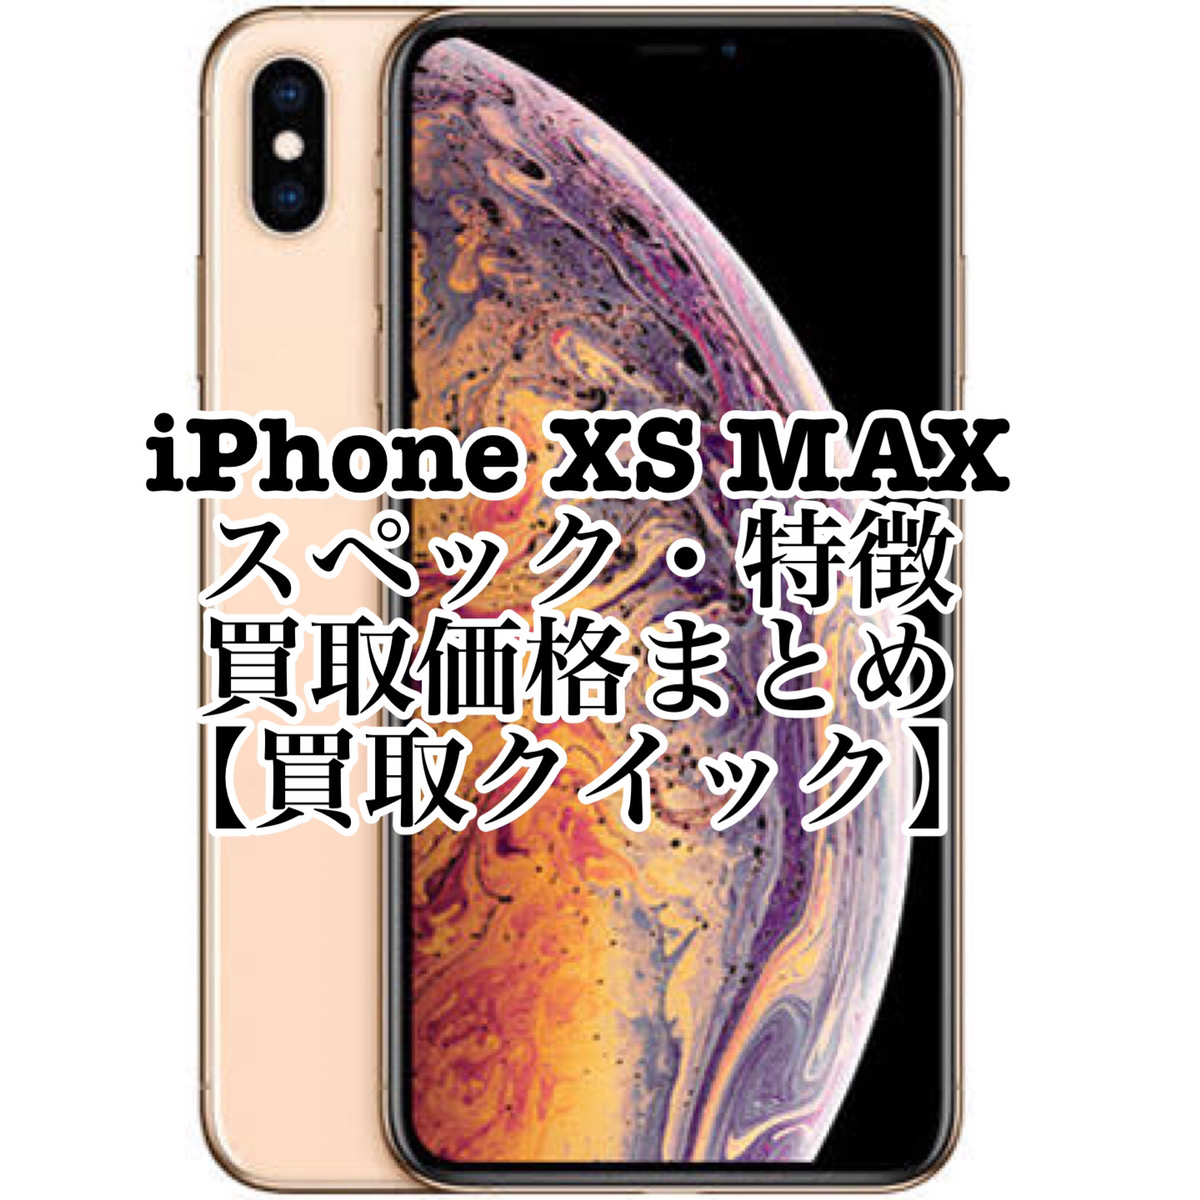 iPhoneXS MAXのスペックや特徴、買取価格まとめ【買取クイック】